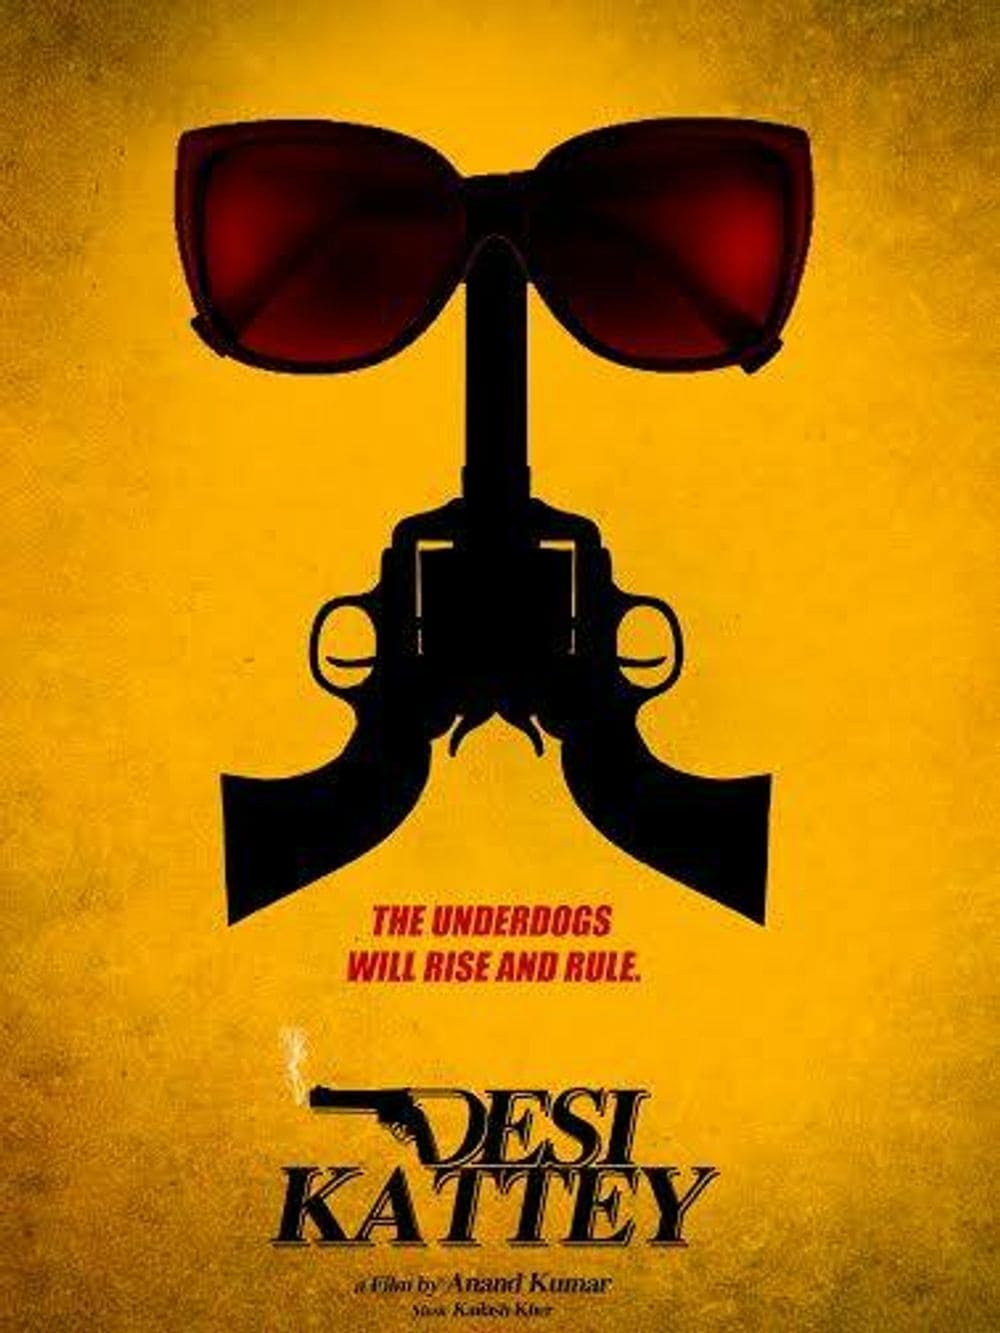 Poster for the movie "Desi Kattey"